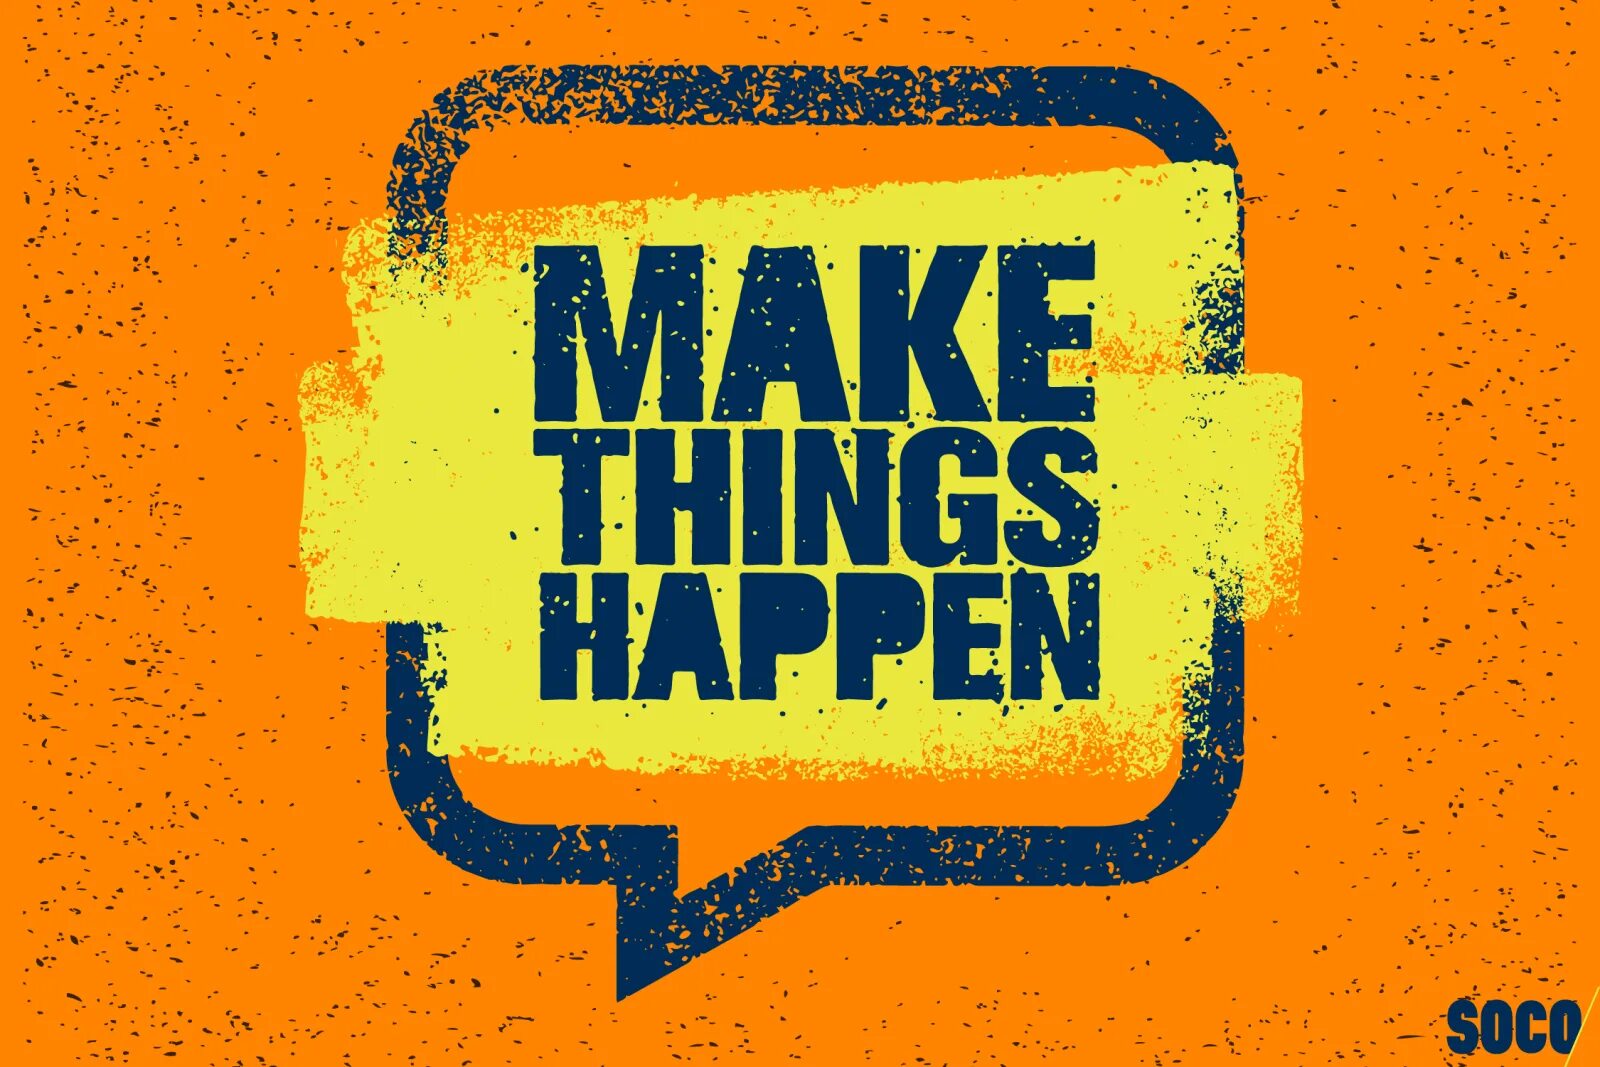 Make your happen. Happen. Making things happen. Make things happen кепка. Things happen обои.